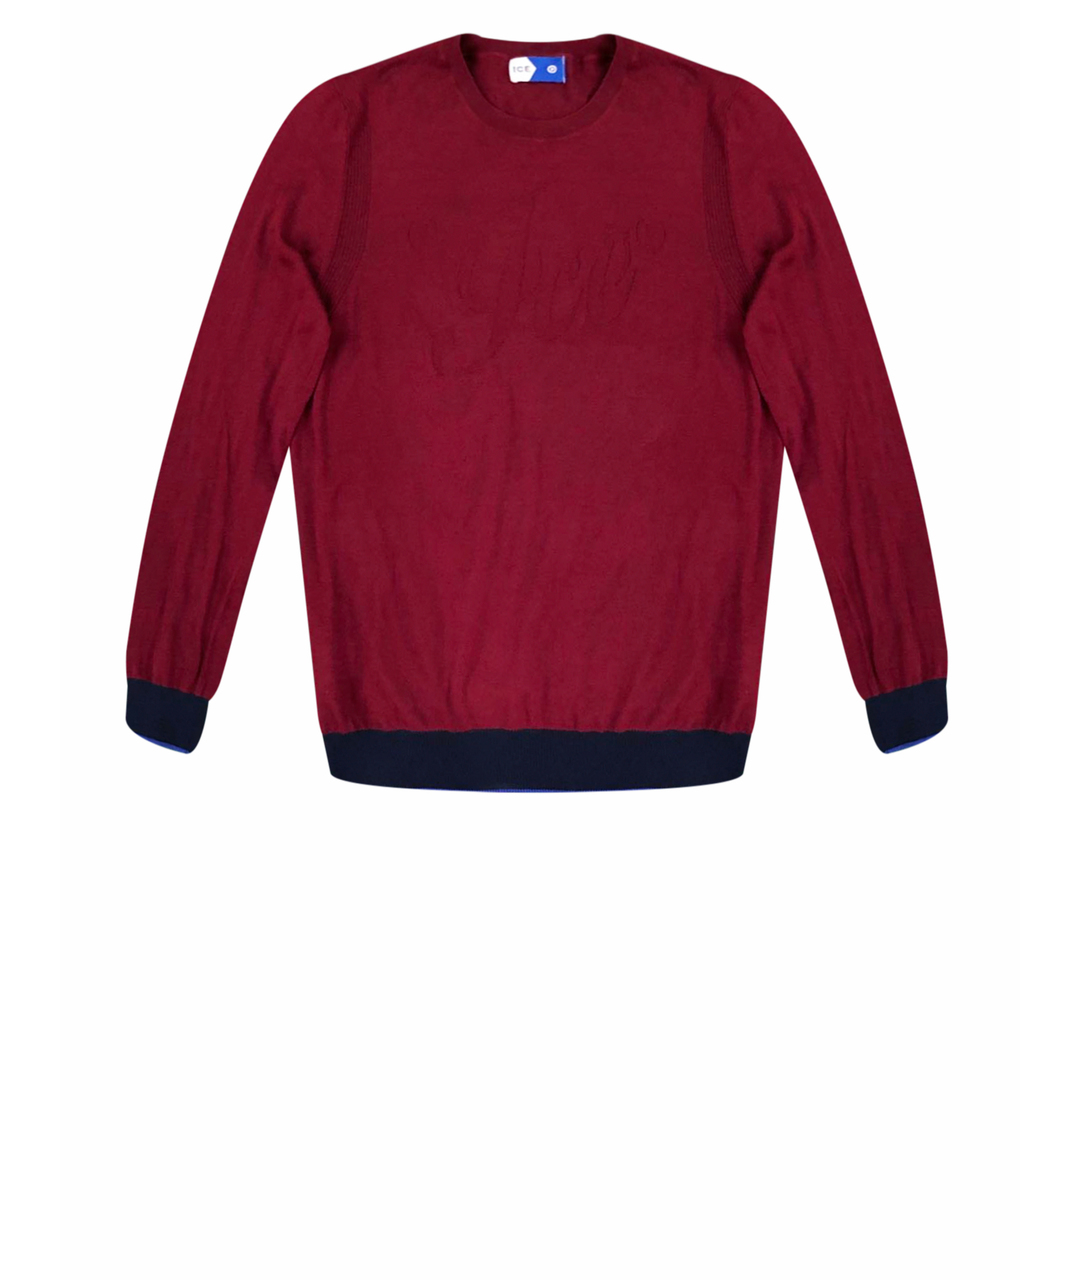 ICE PLAY Бордовый шерстяной джемпер / свитер, фото 1